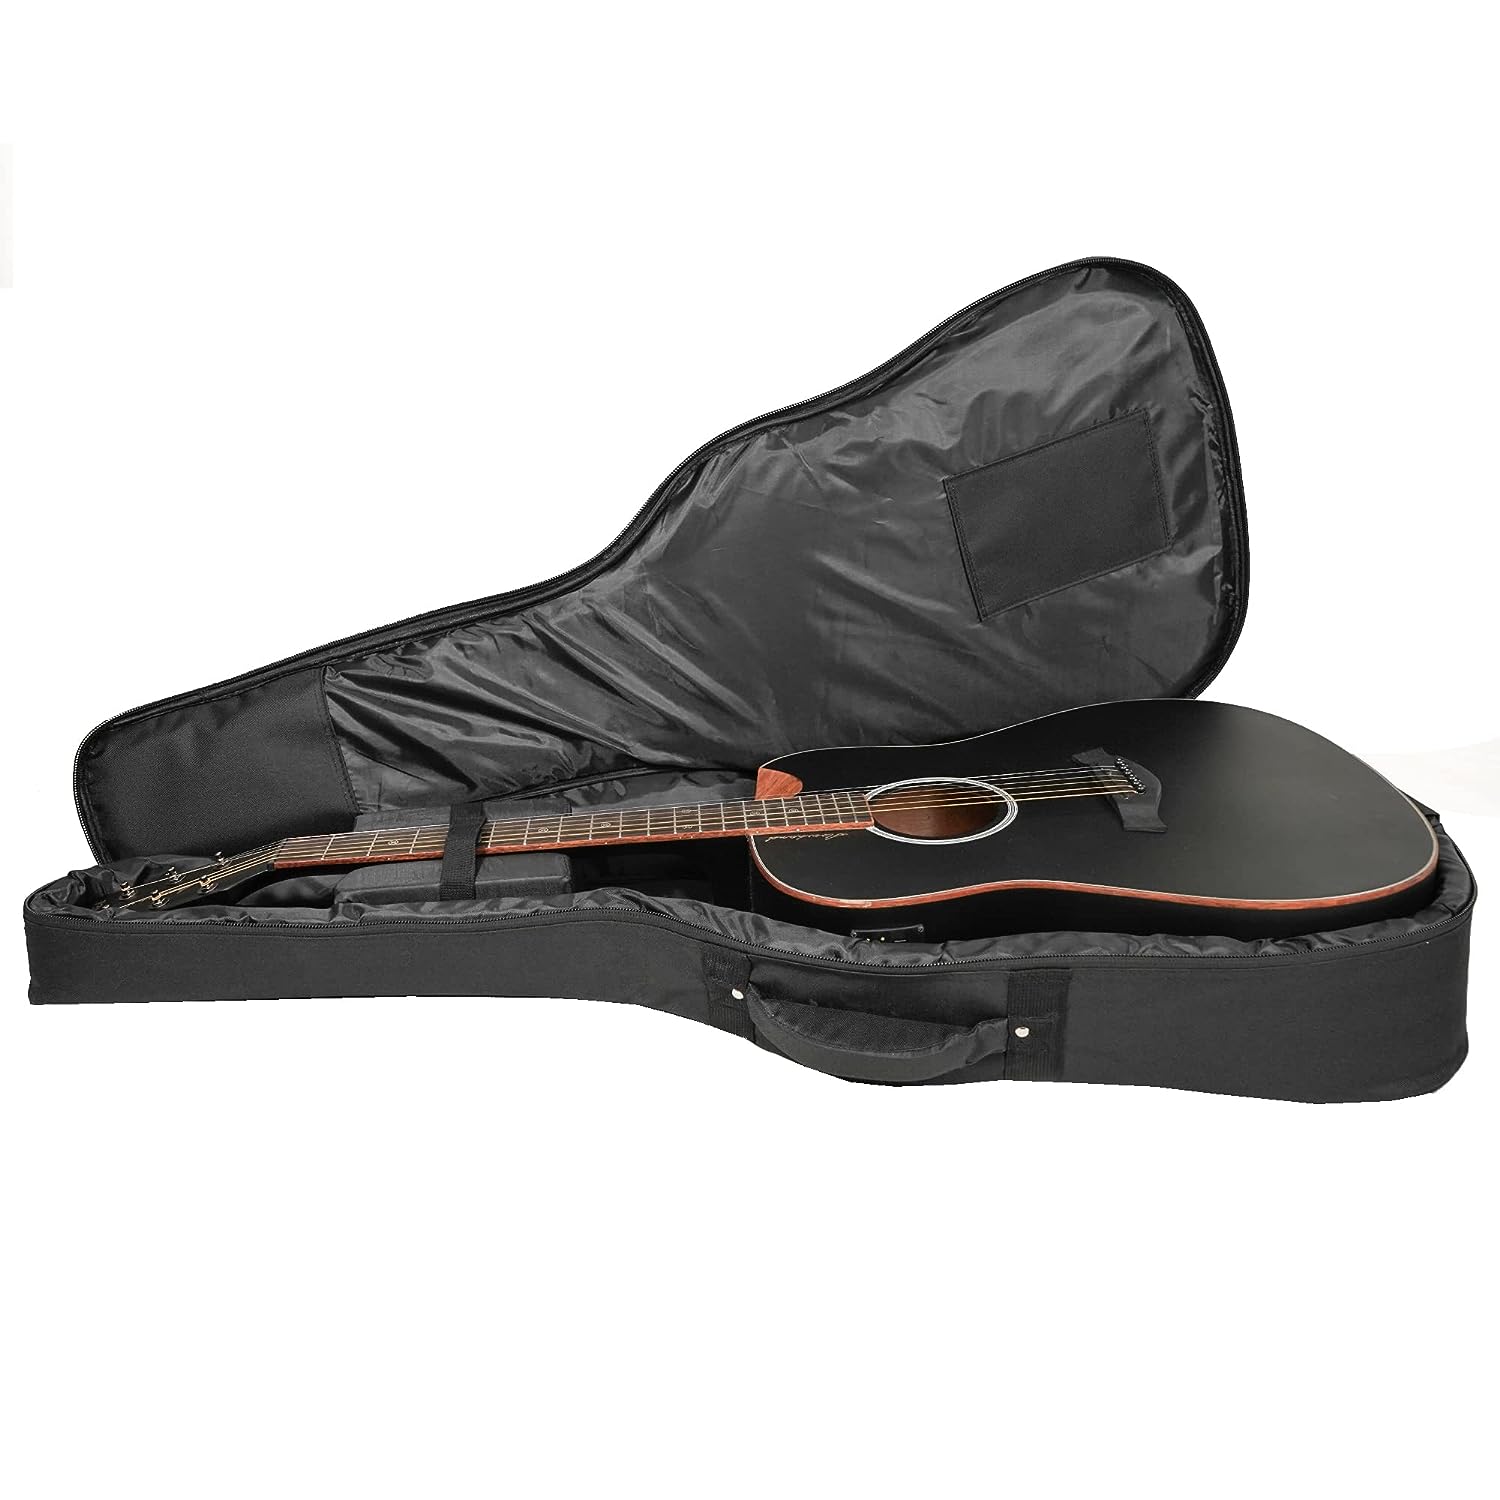 Roksak G10D well padded acoustic guitar gig bag - Finale Guitar